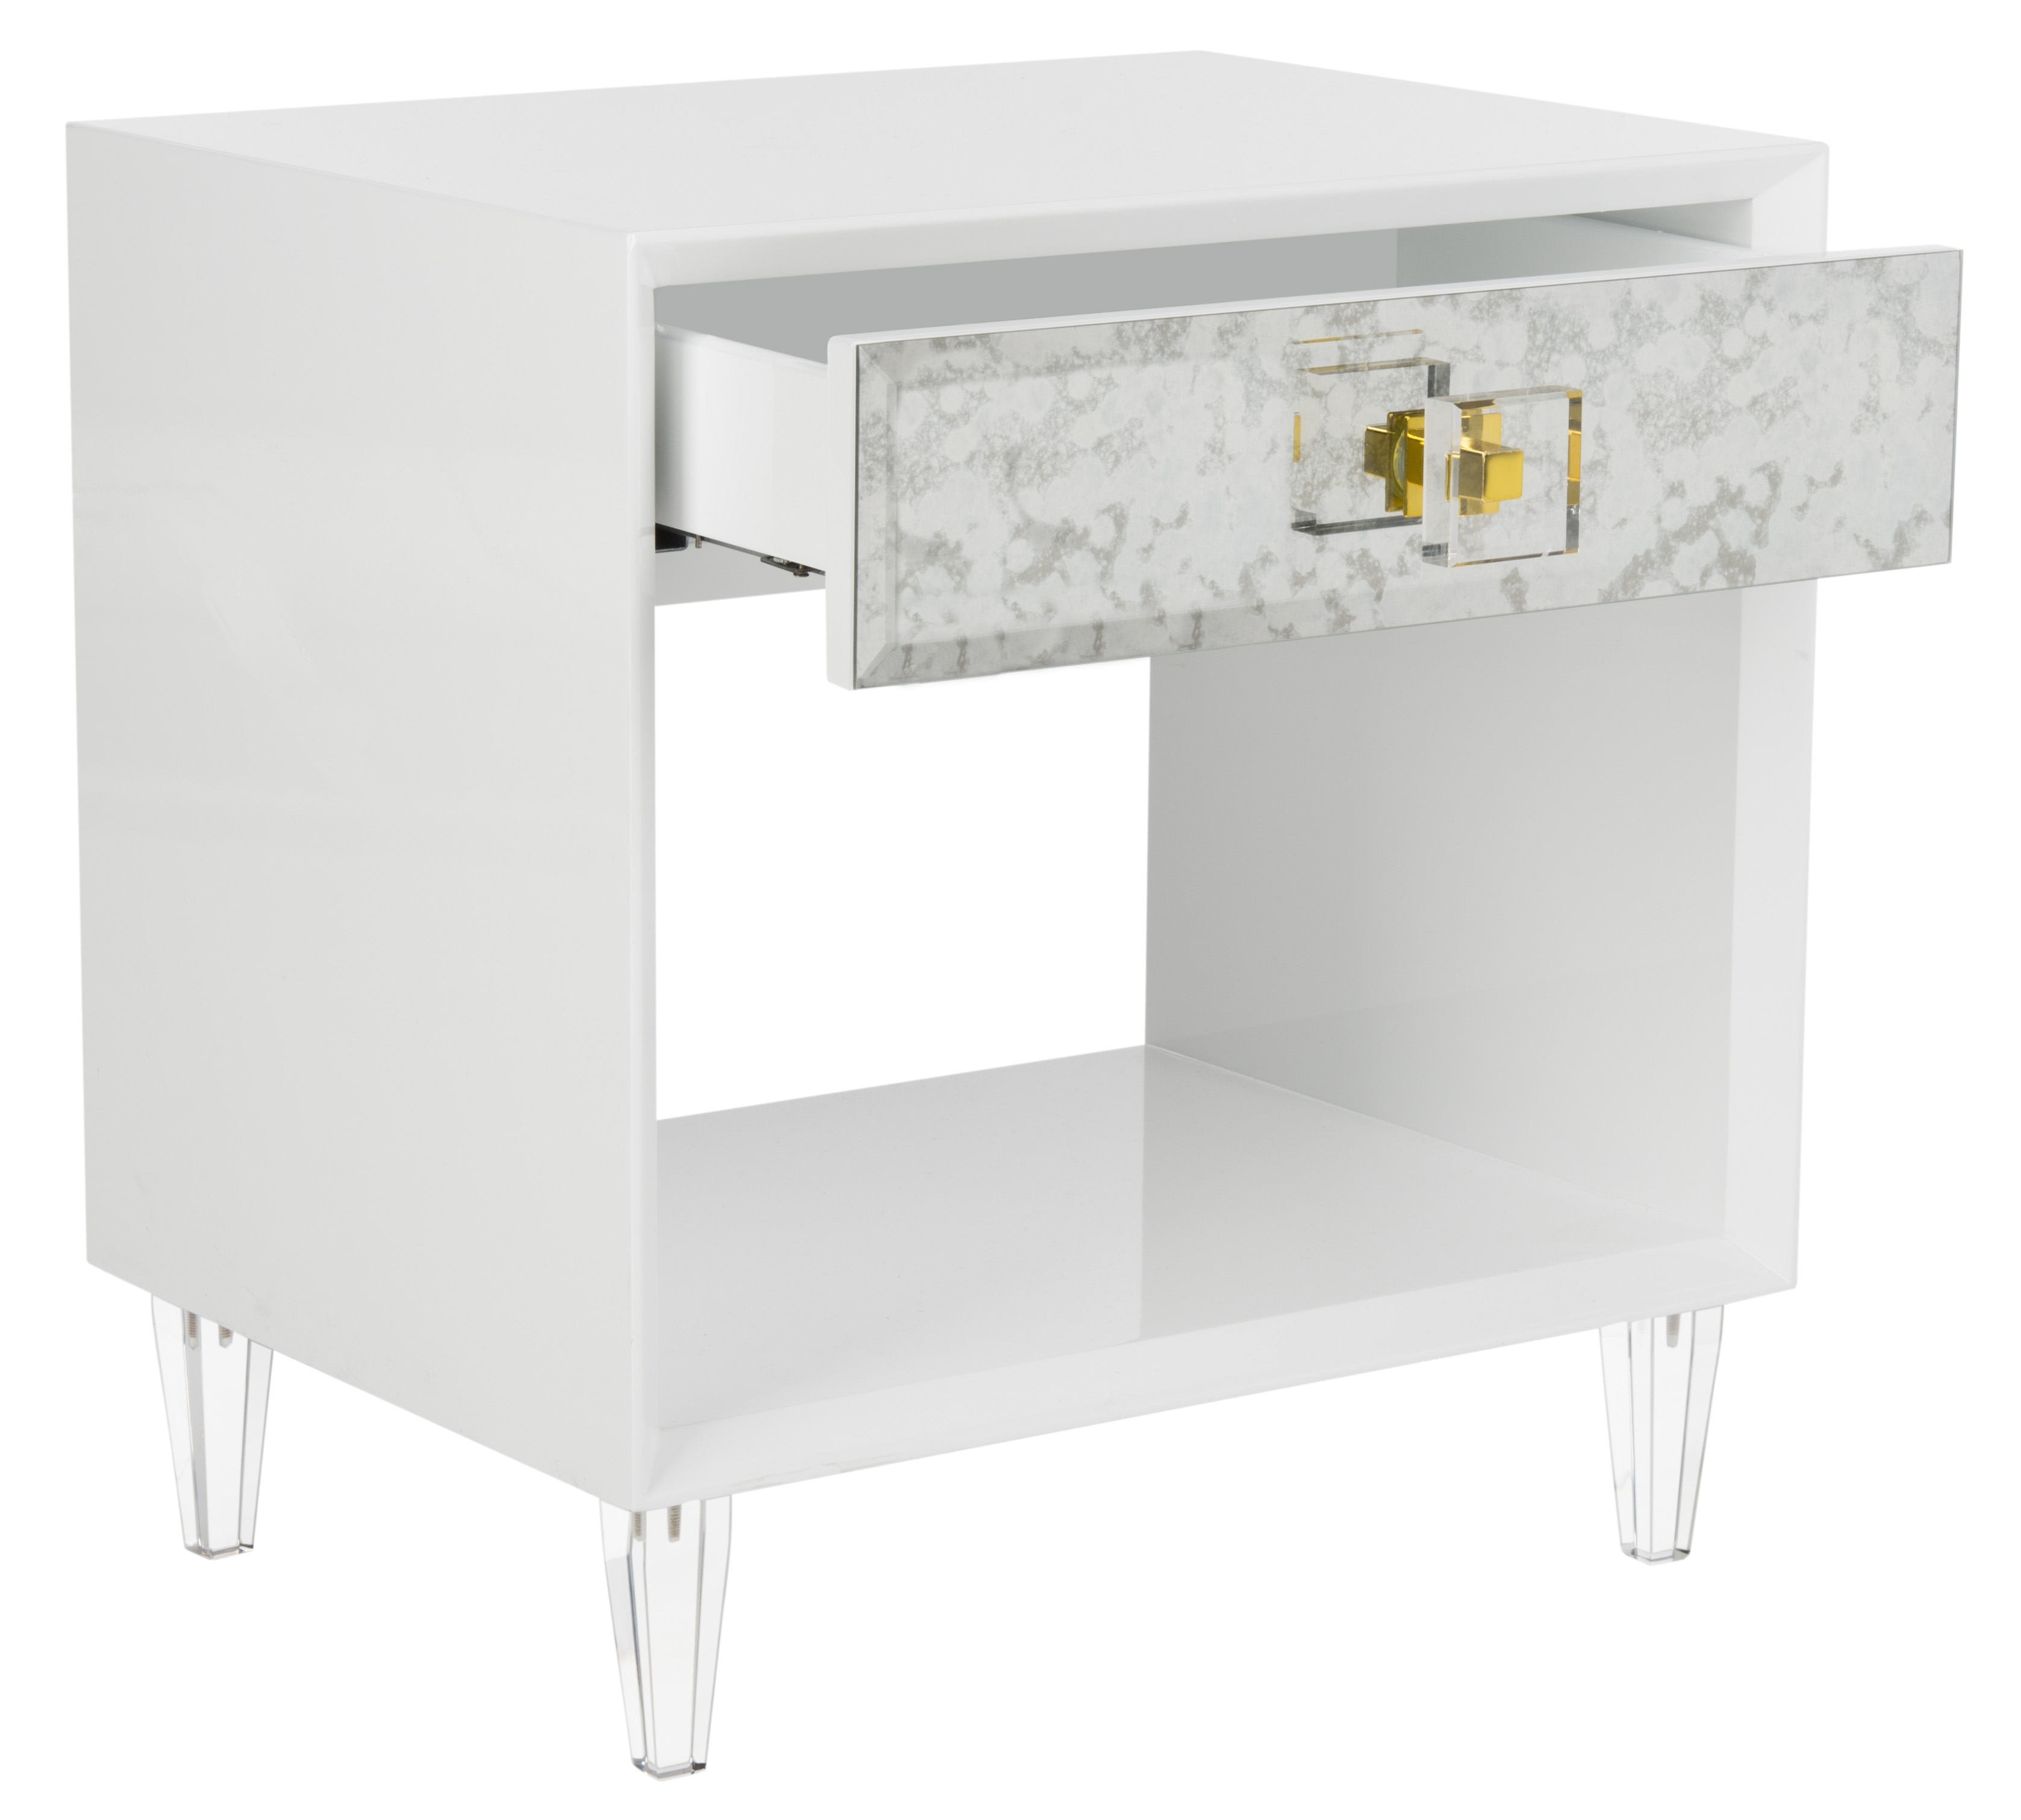 Arcelia Acrylic Eglomise Side Table - White - Arlo Home - Image 1